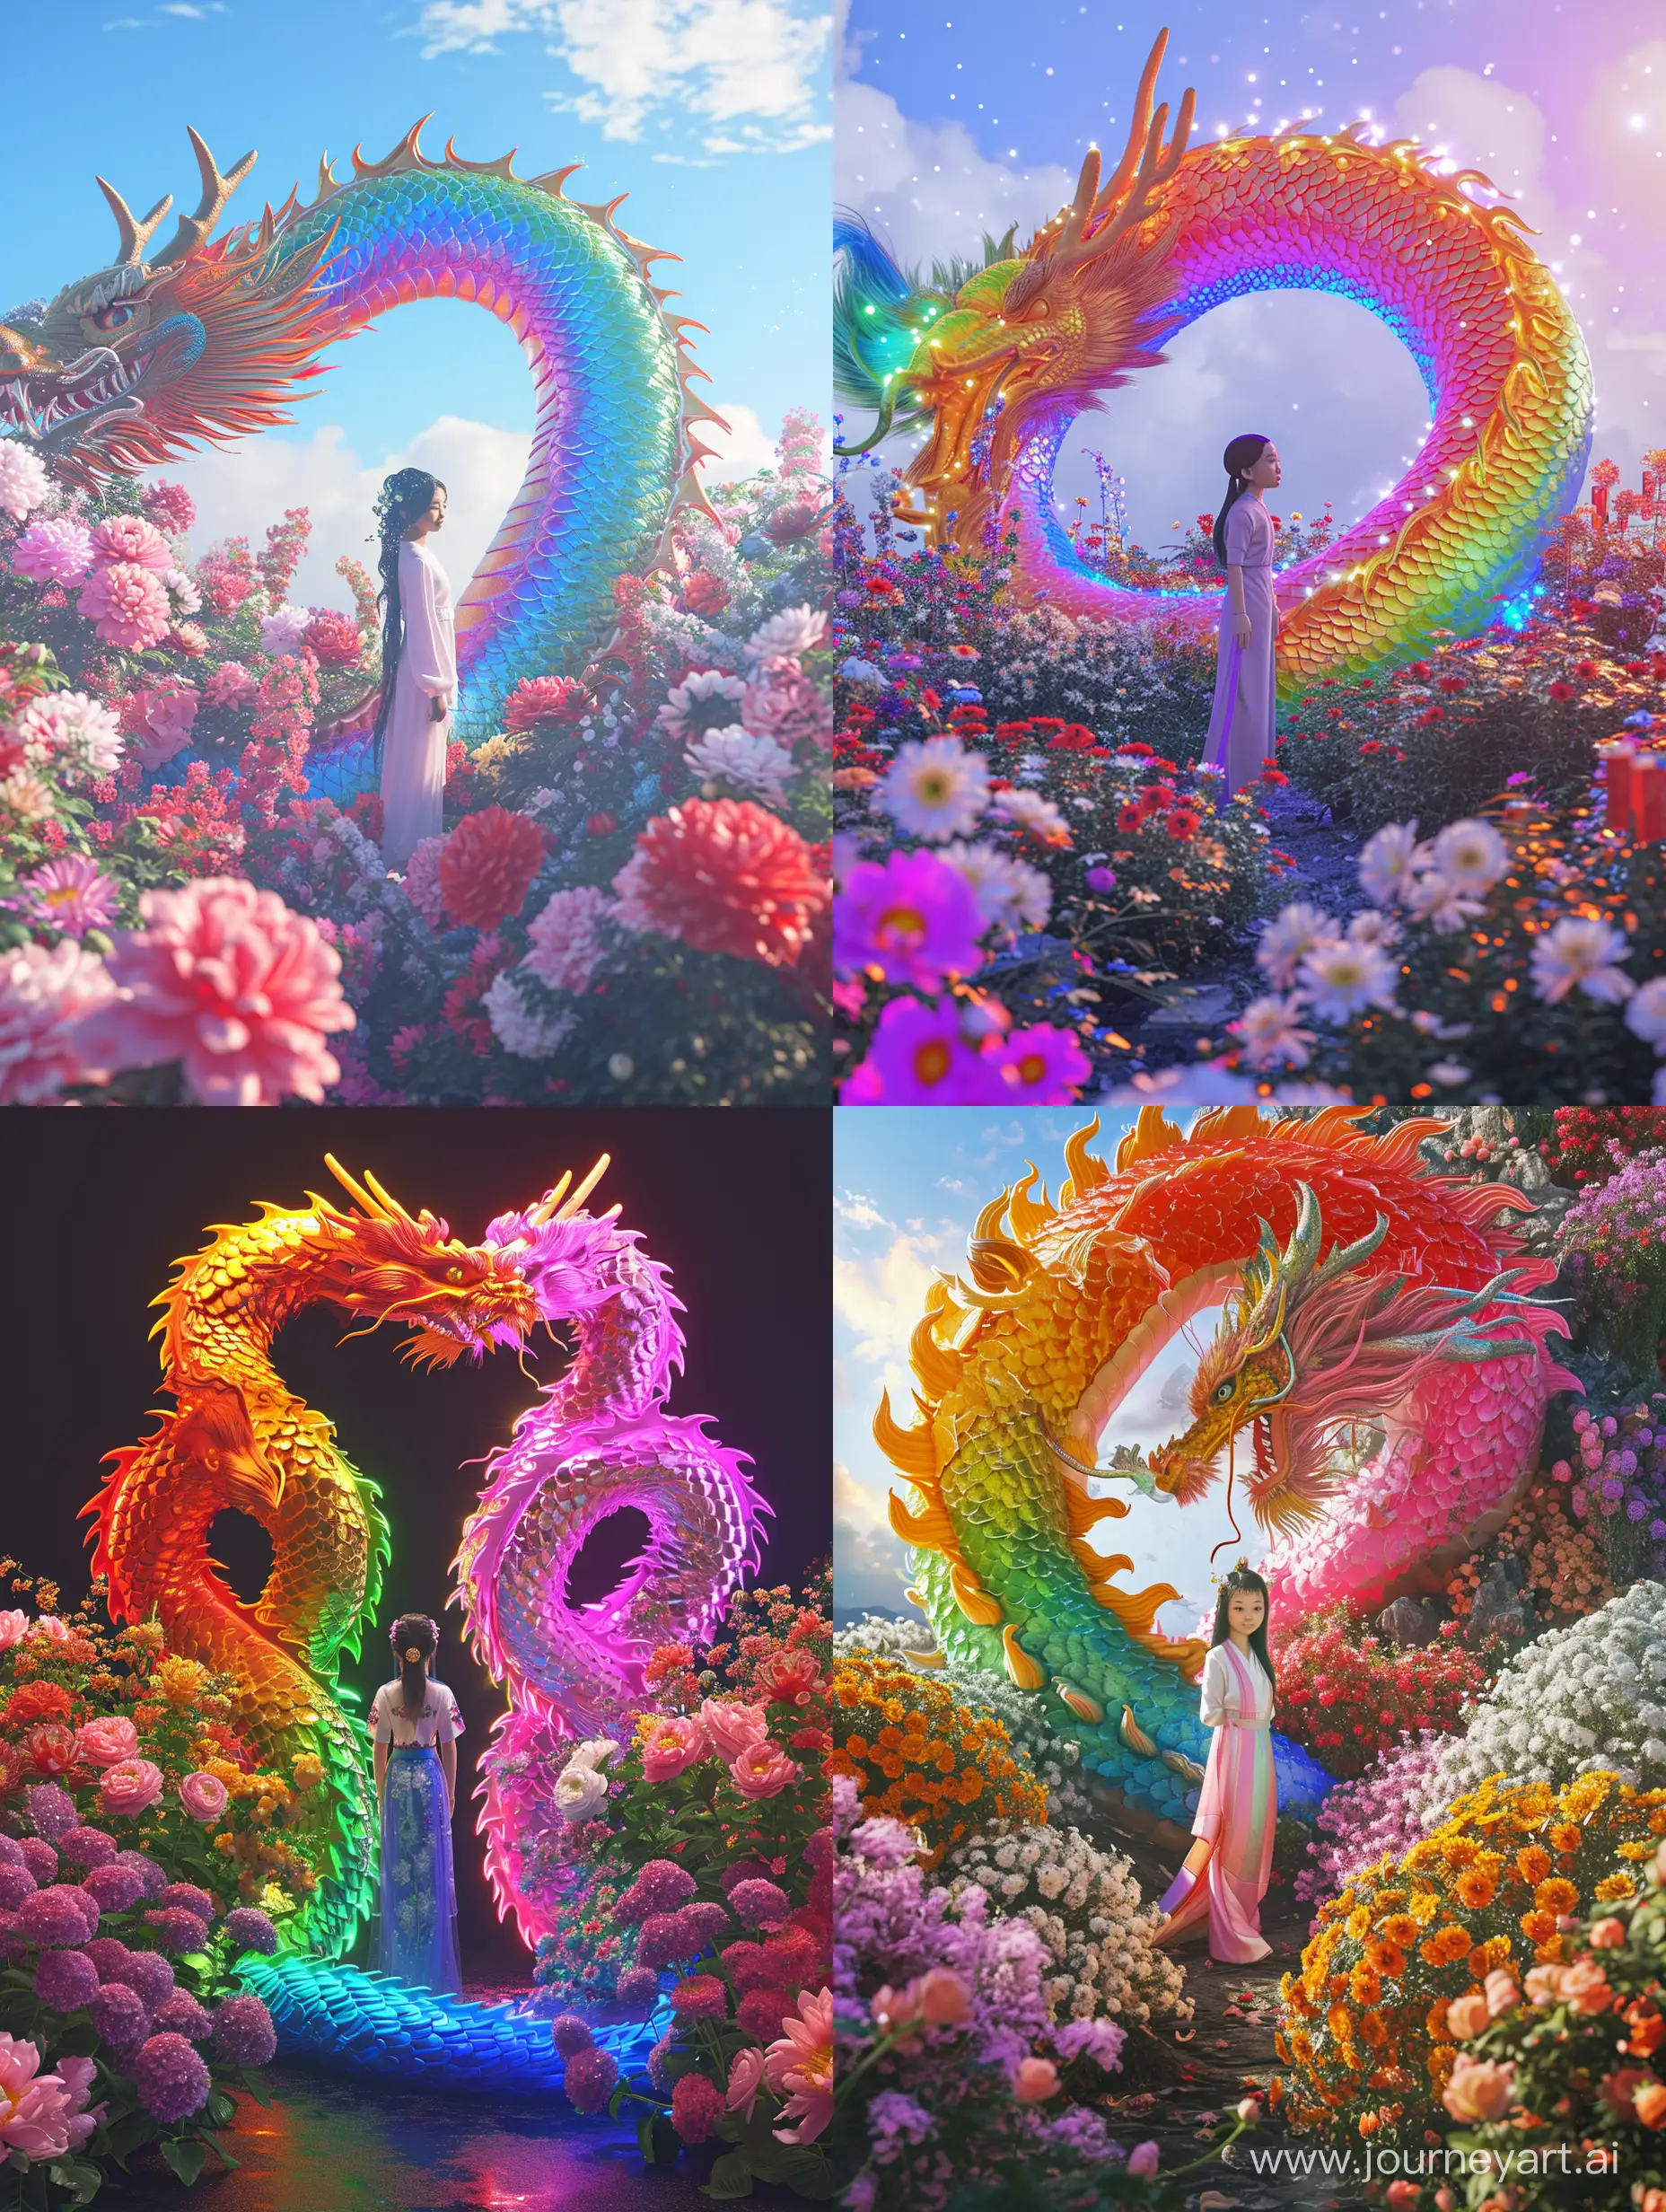 Chinese-Girl-Embraces-Rainbow-Dragon-in-Surrealistic-Grand-Scene